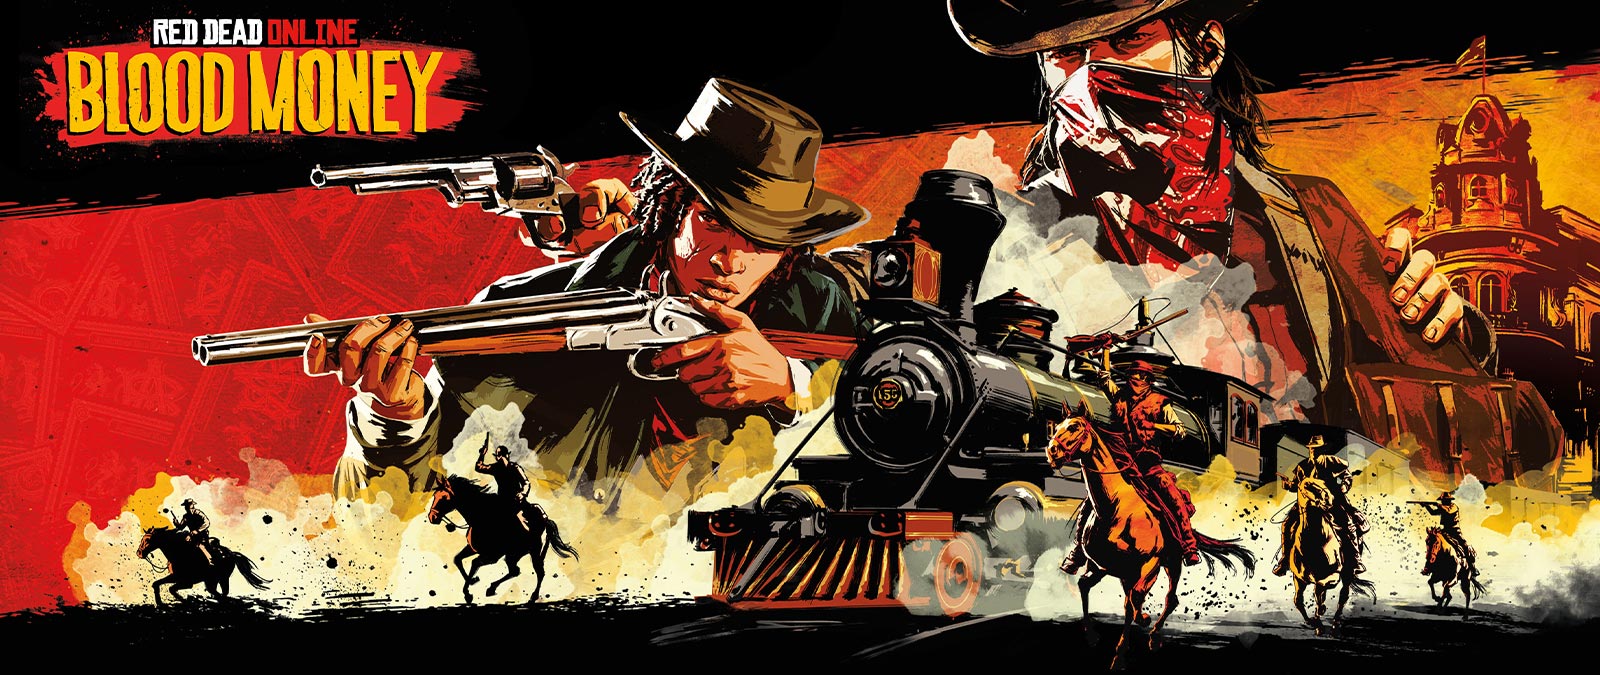 Red Dead Online: Blood Money, ένοπλοι ληστές πάνω σε άλογα επιτίθενται σε τρένο.